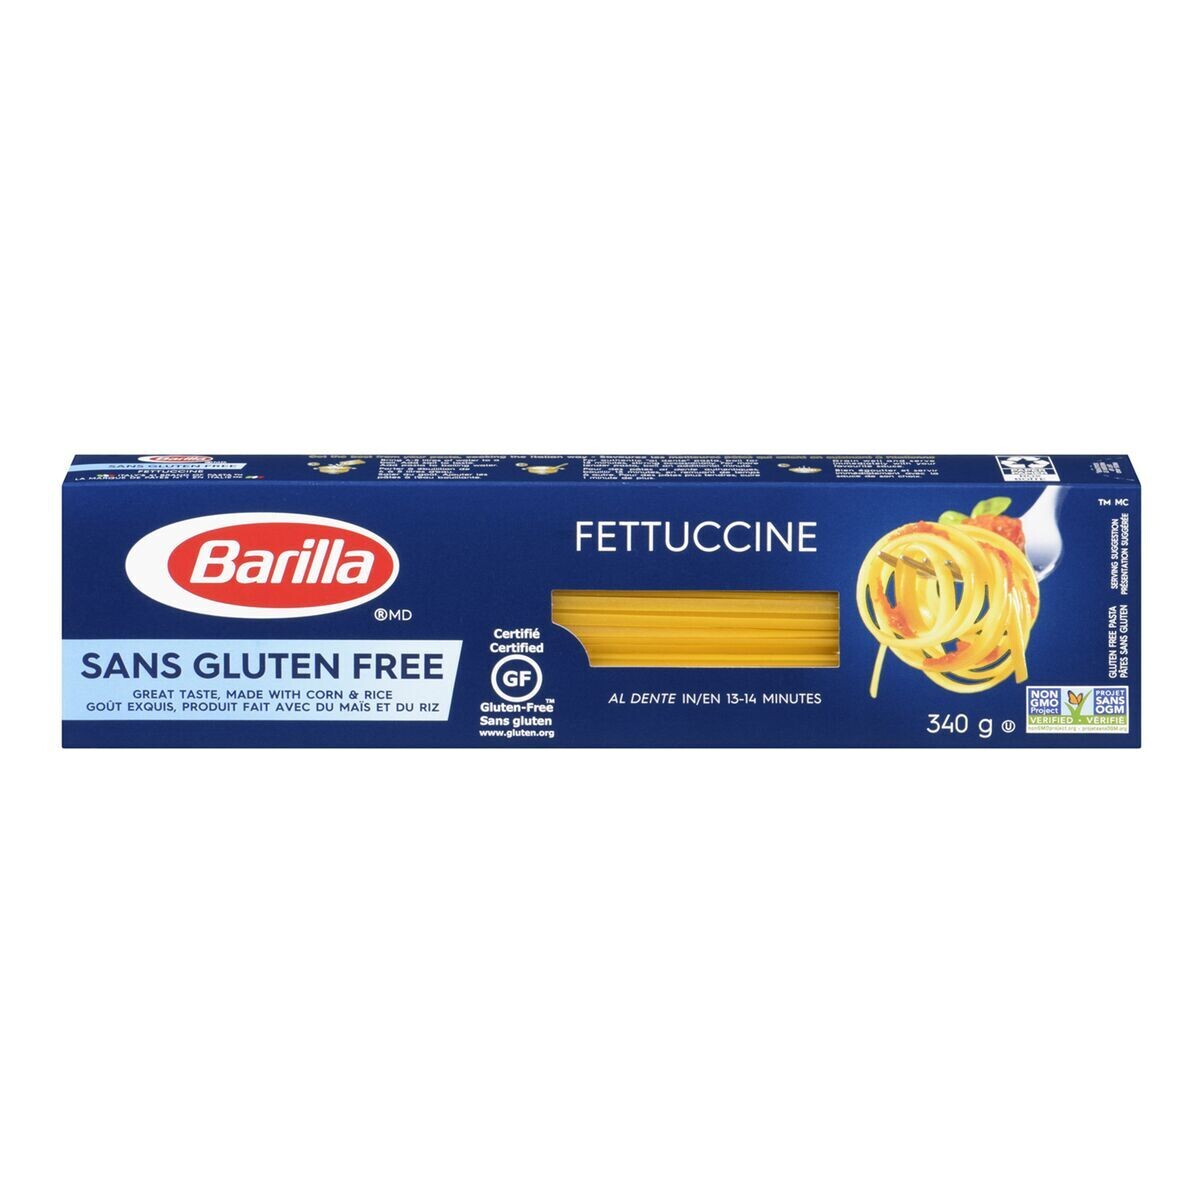 24090 Barilla Fettuccine 340g